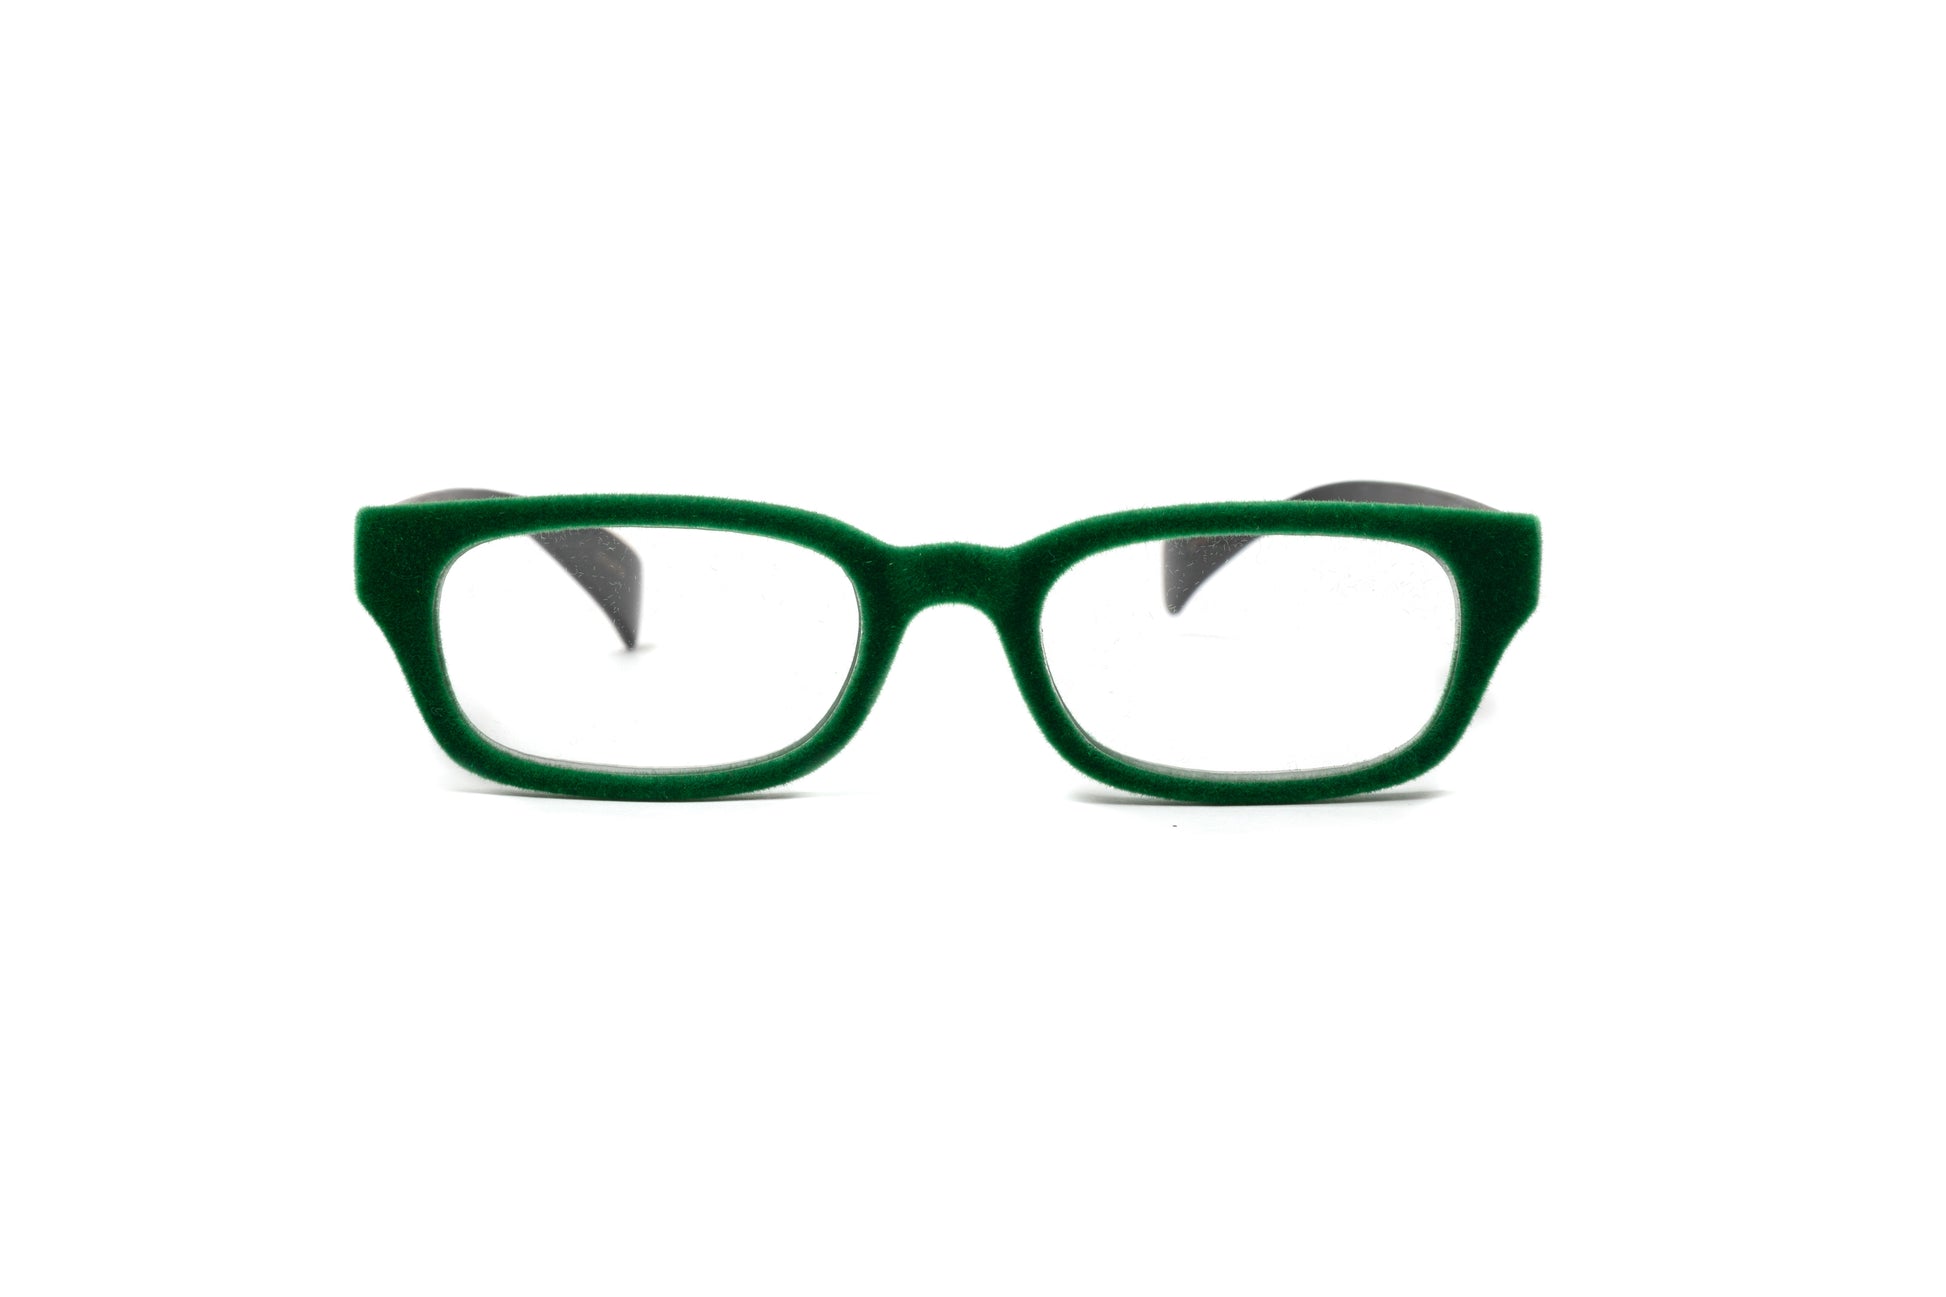 Green velvet rimmed reading glasses with matte black temples by Eyejets